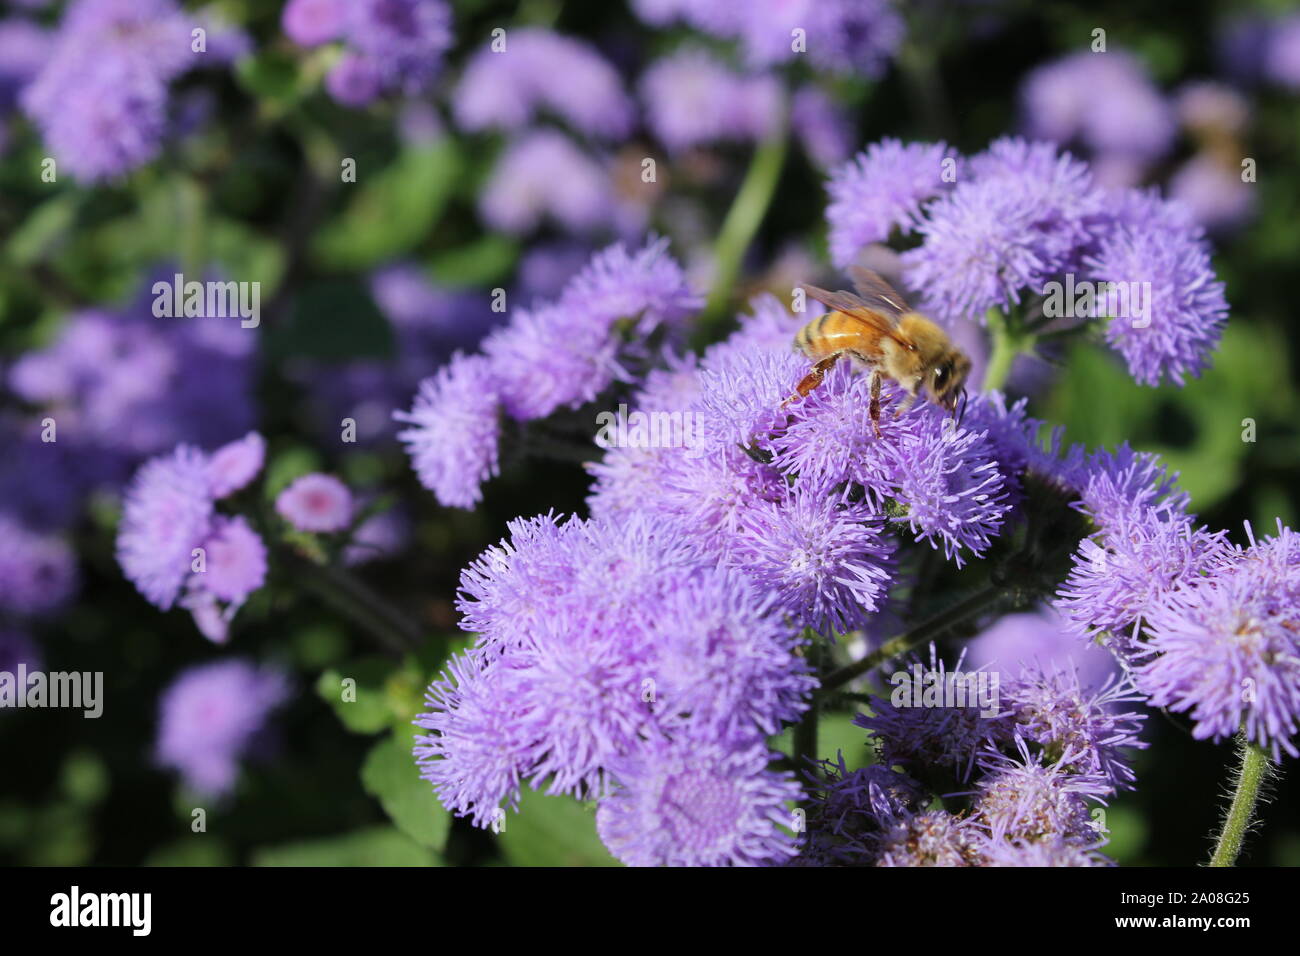 Honeybee pollinating beautiful purple flower blossom. Stock Photo